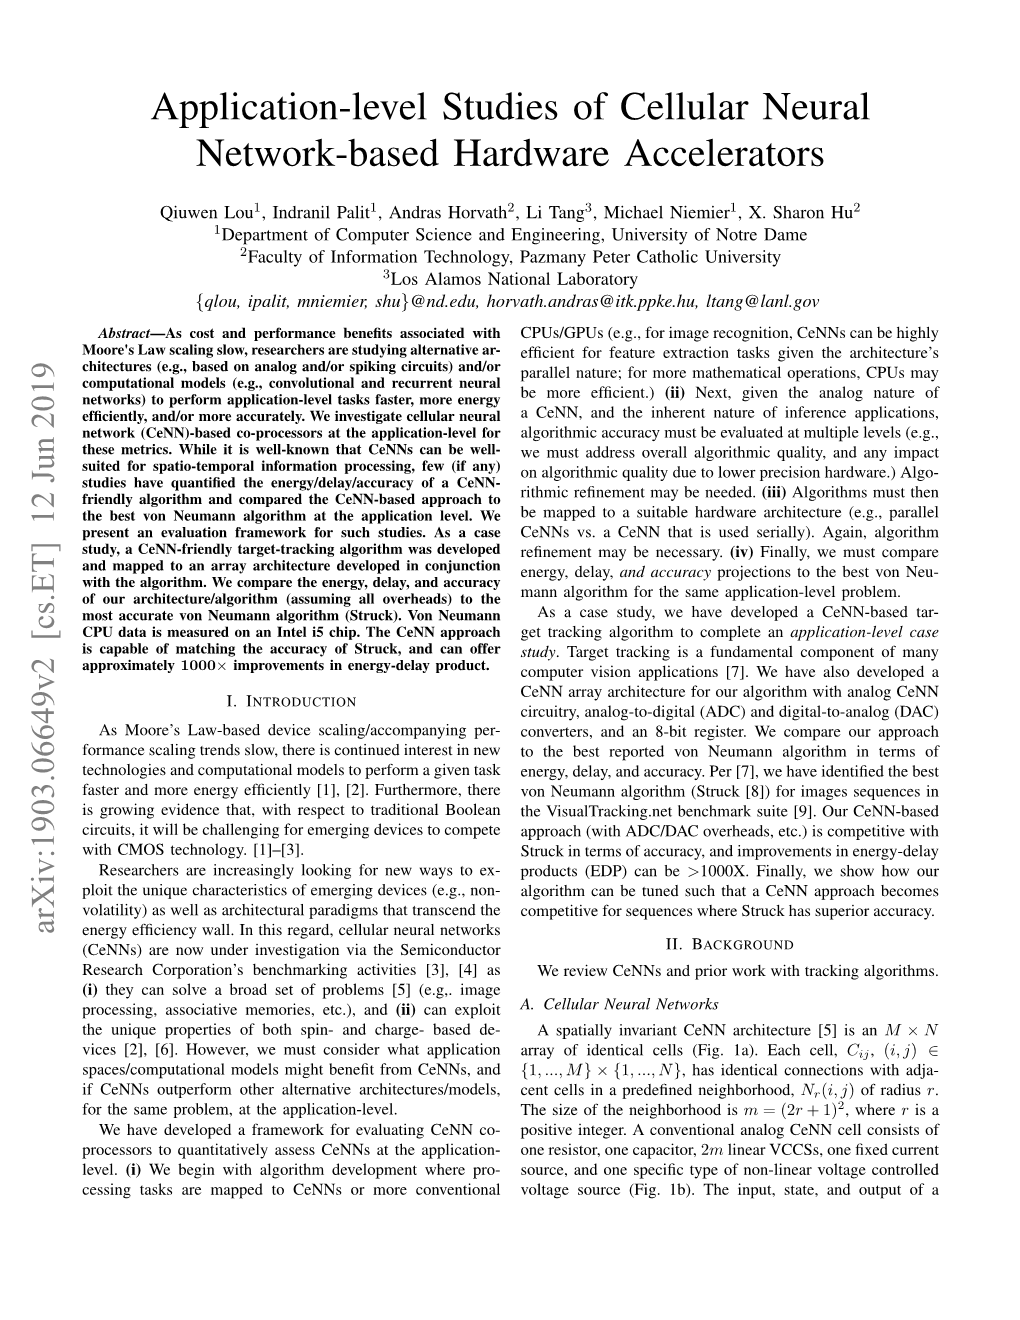 Application-Level Studies of Cellular Neural Network-Based Hardware Accelerators